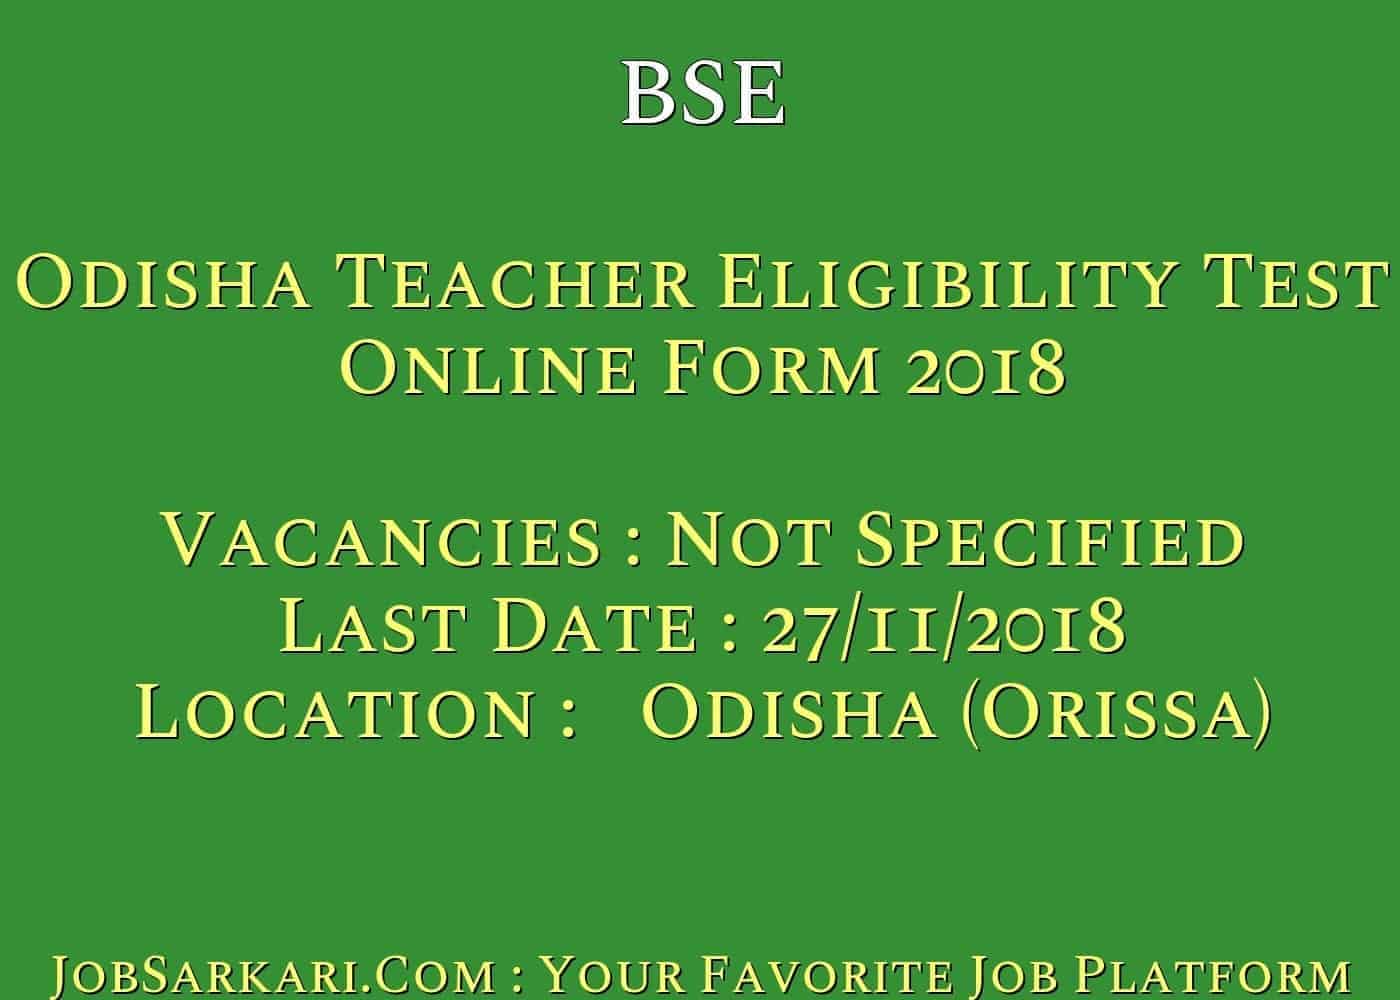 BSE Odisha Teacher Eligibility Test Online Form 2018